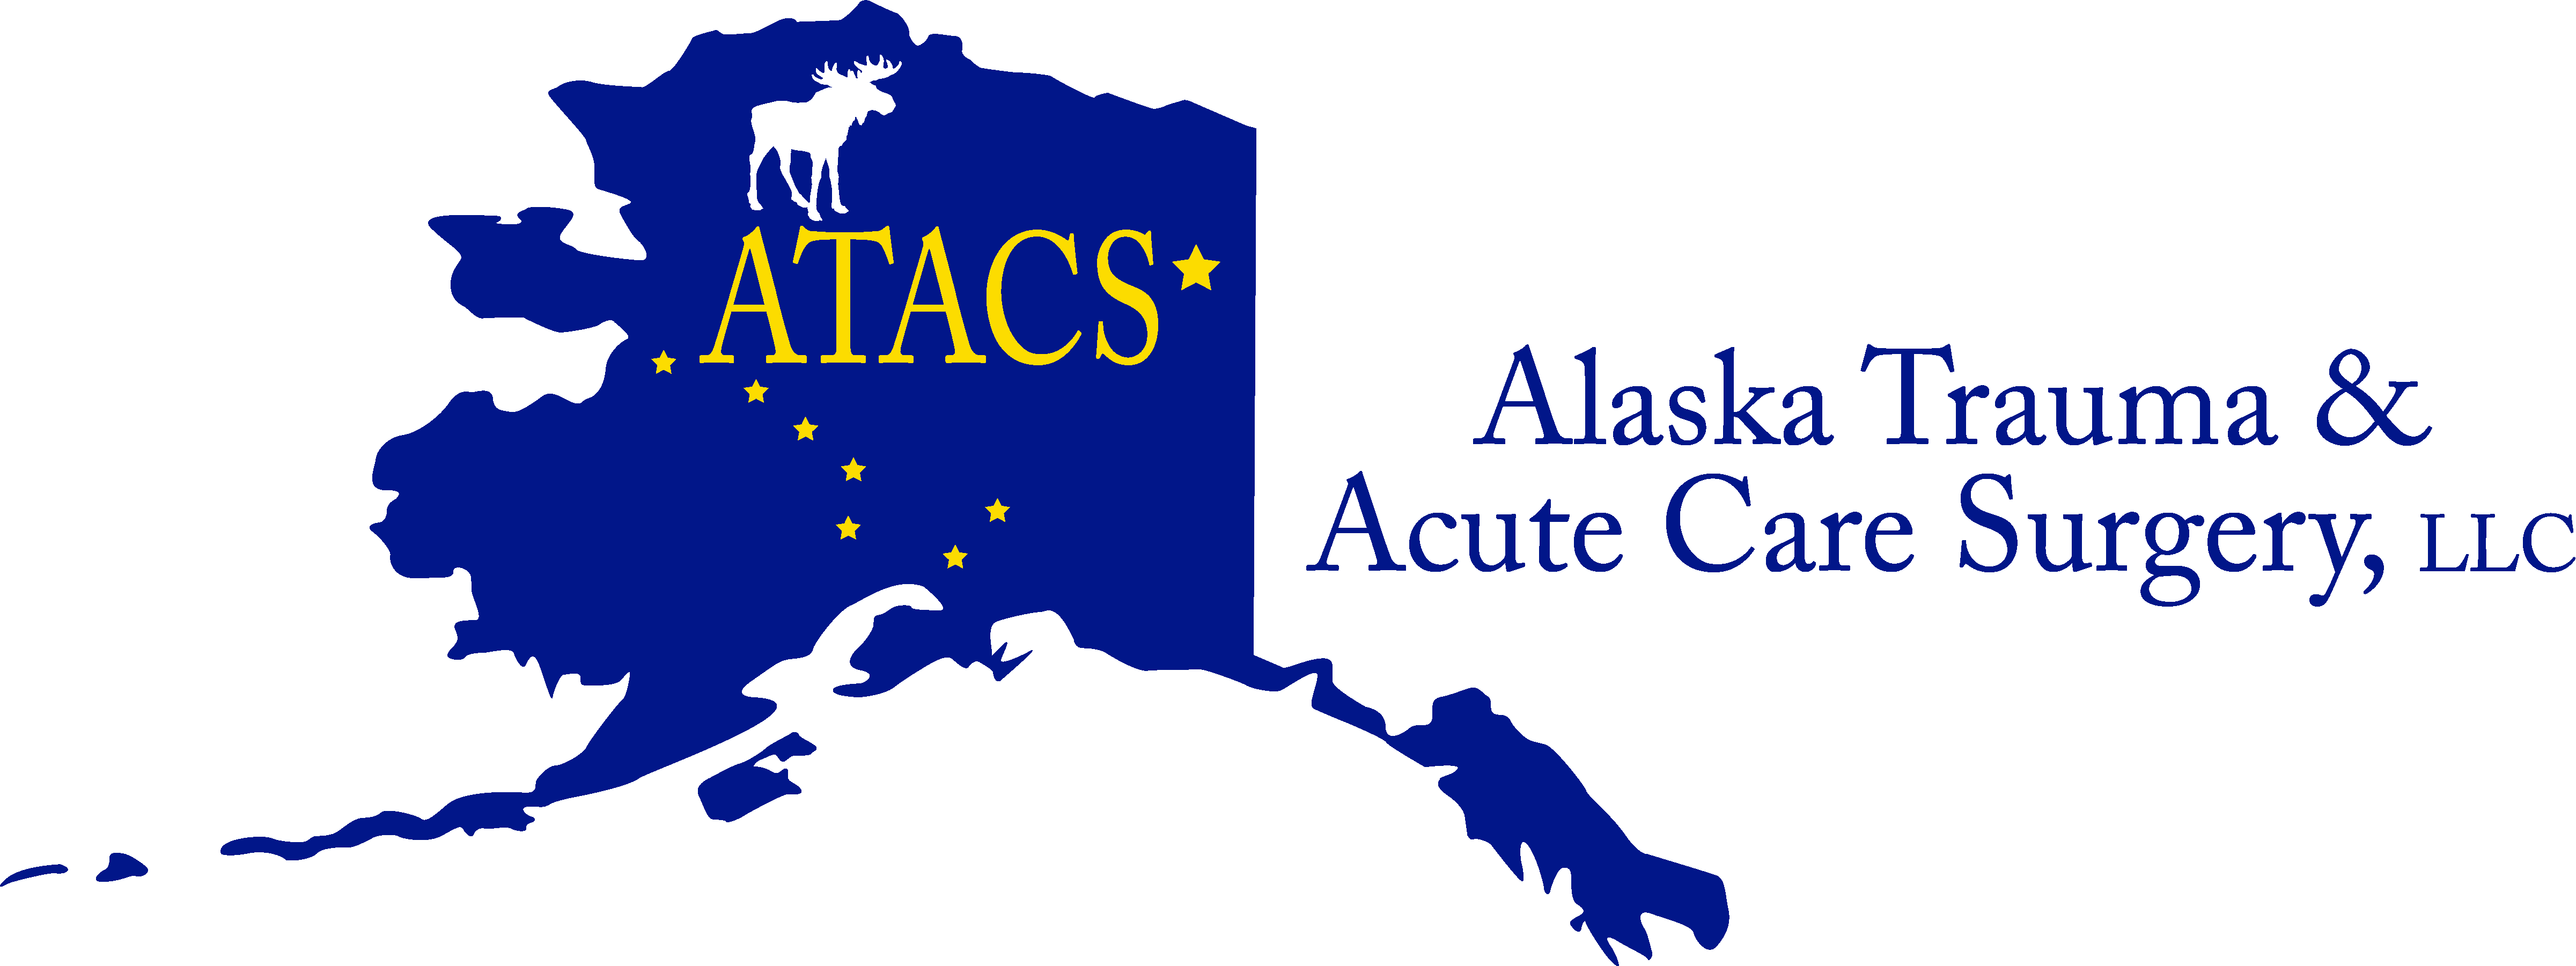 Alaska Trauma & Acute Care Surgery